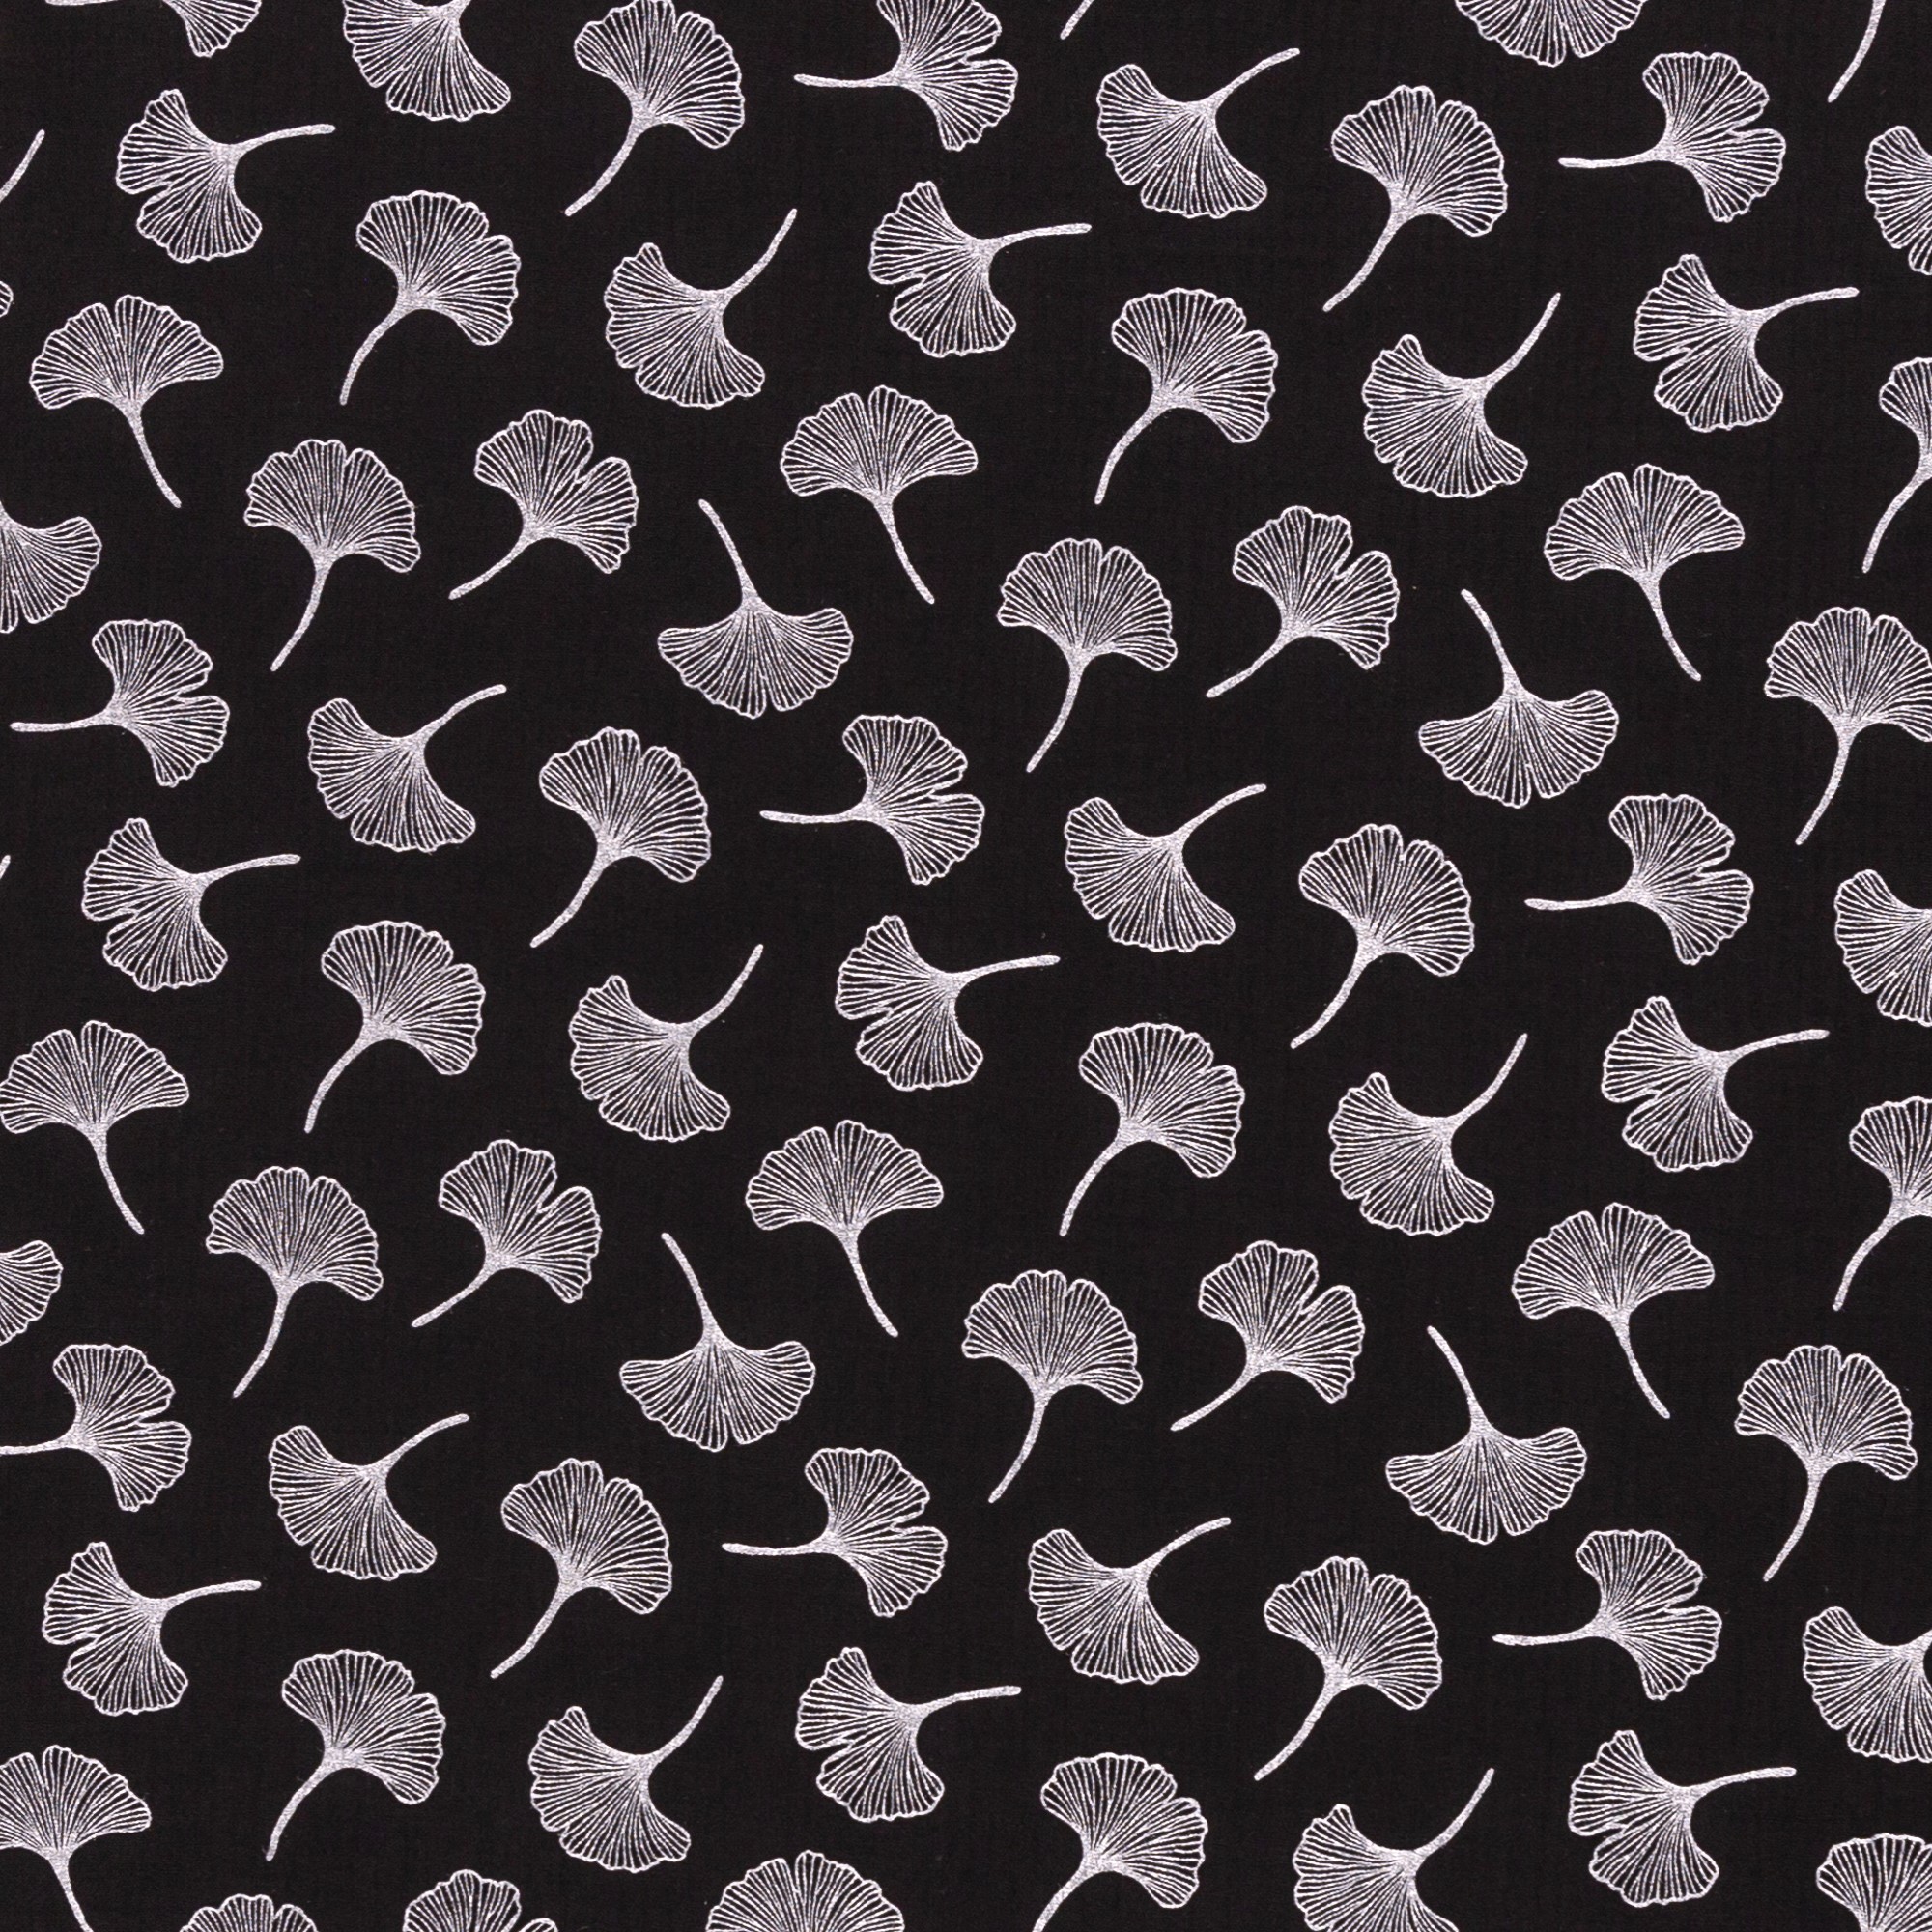 Baumwolle Musselin Double Gauze mit Ginkoblättern - schwarz